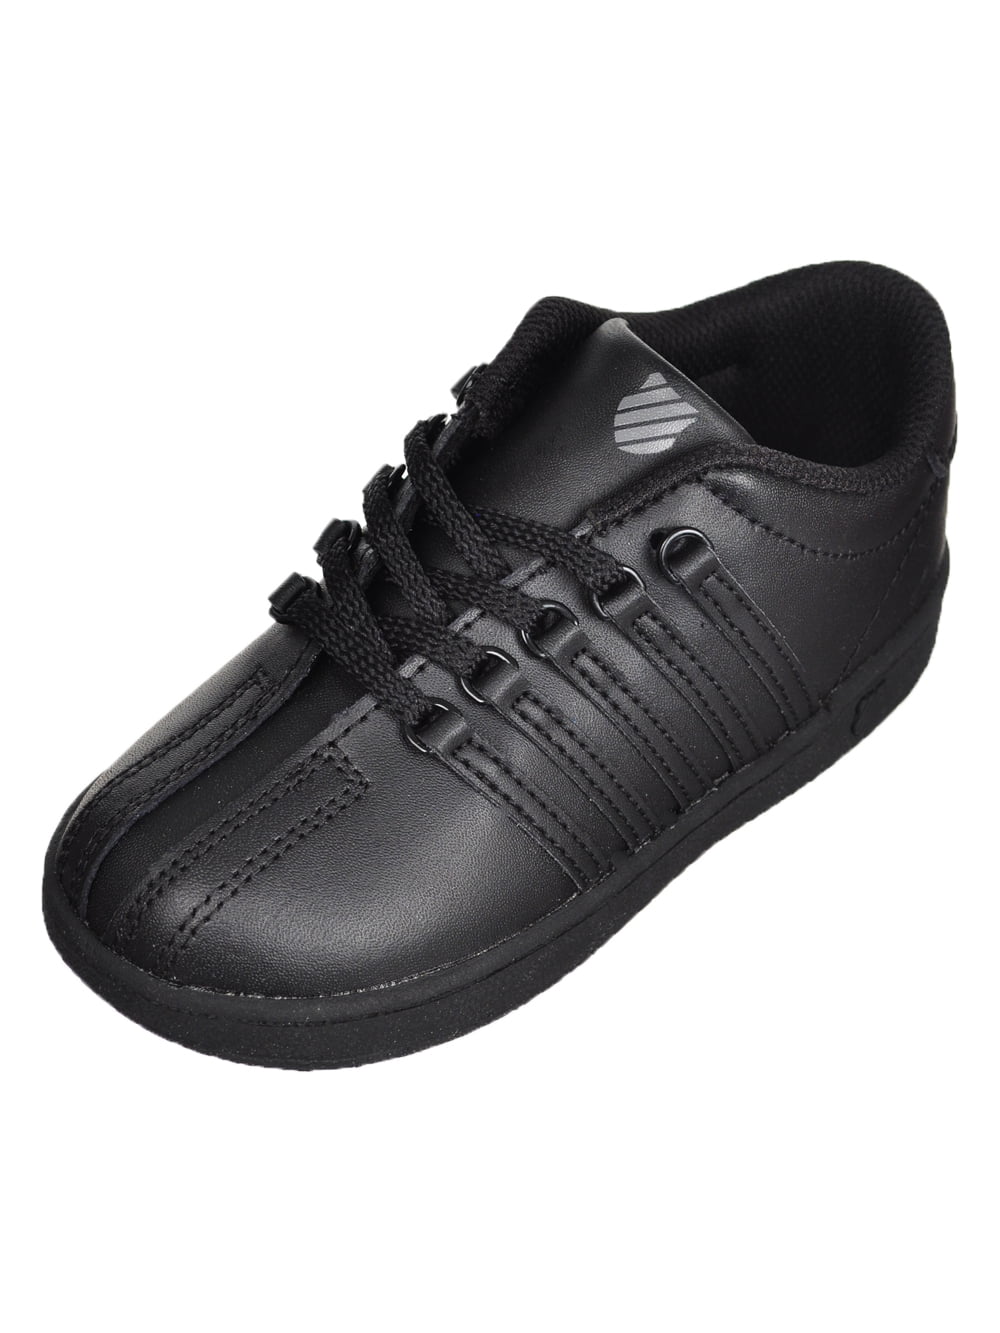 Rondlopen Leuk vinden dek K-Swiss Boys' Sneakers (Sizes 7 - 10) - black, 8 toddler - Walmart.com